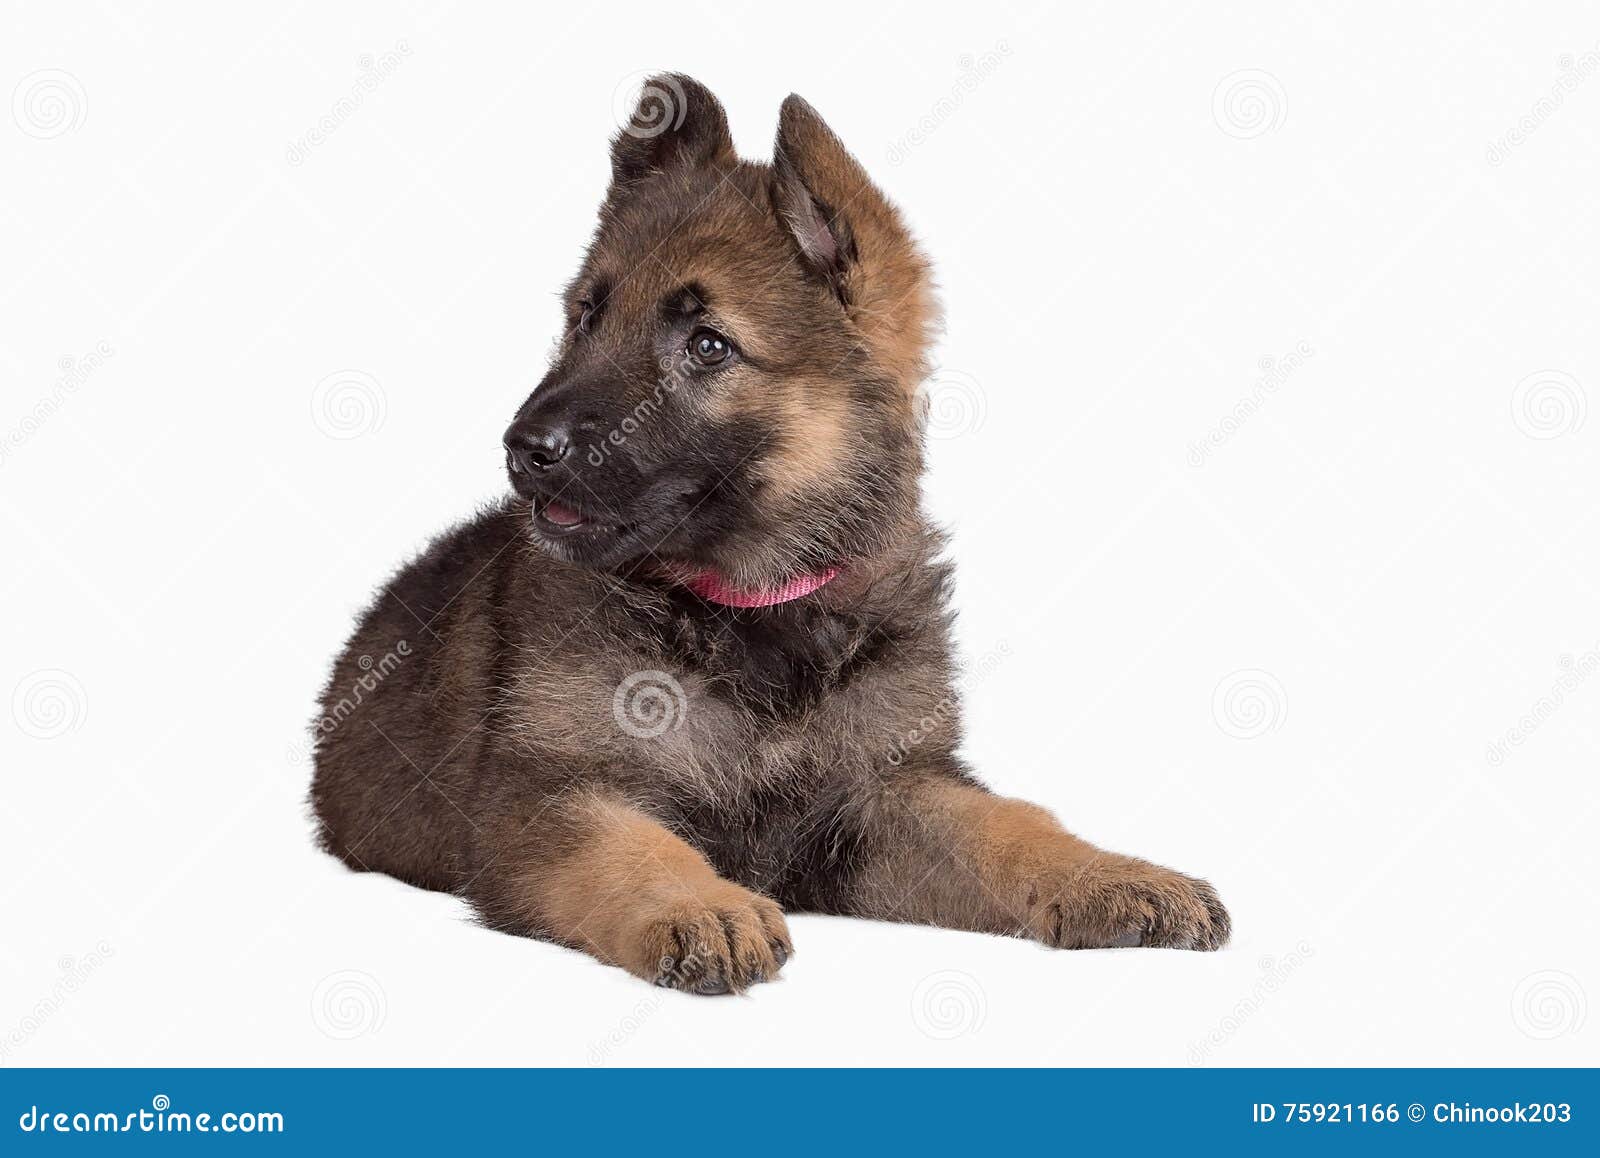 dog collar for german shepherd puppy